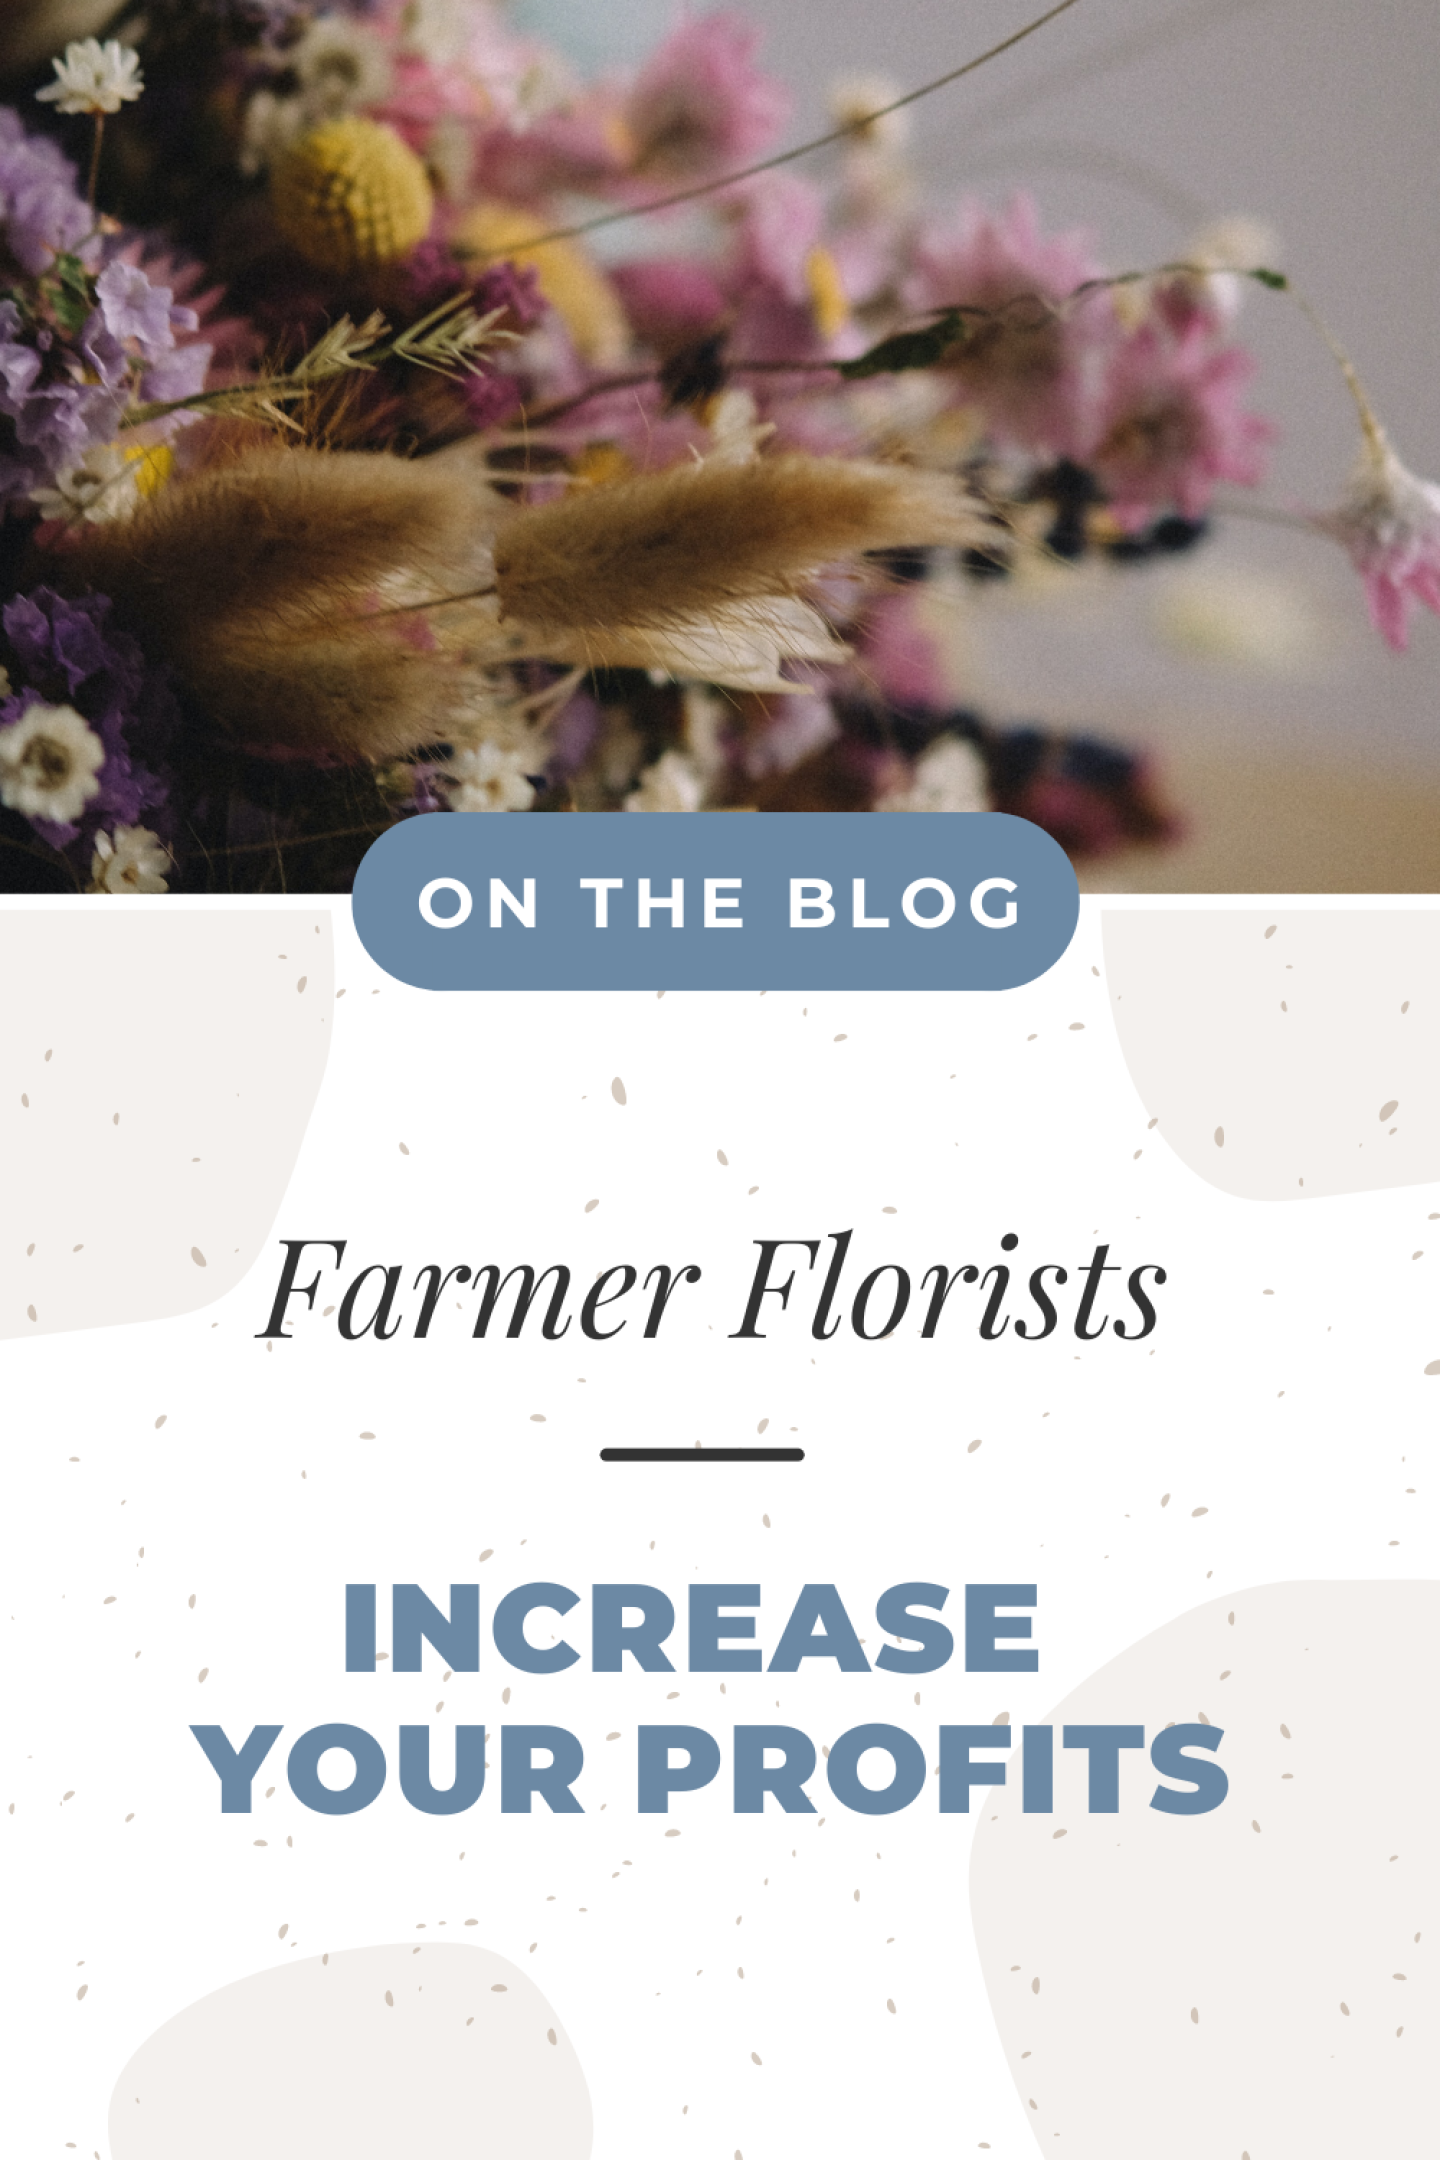 How to Make More Money as a Farmer Florist